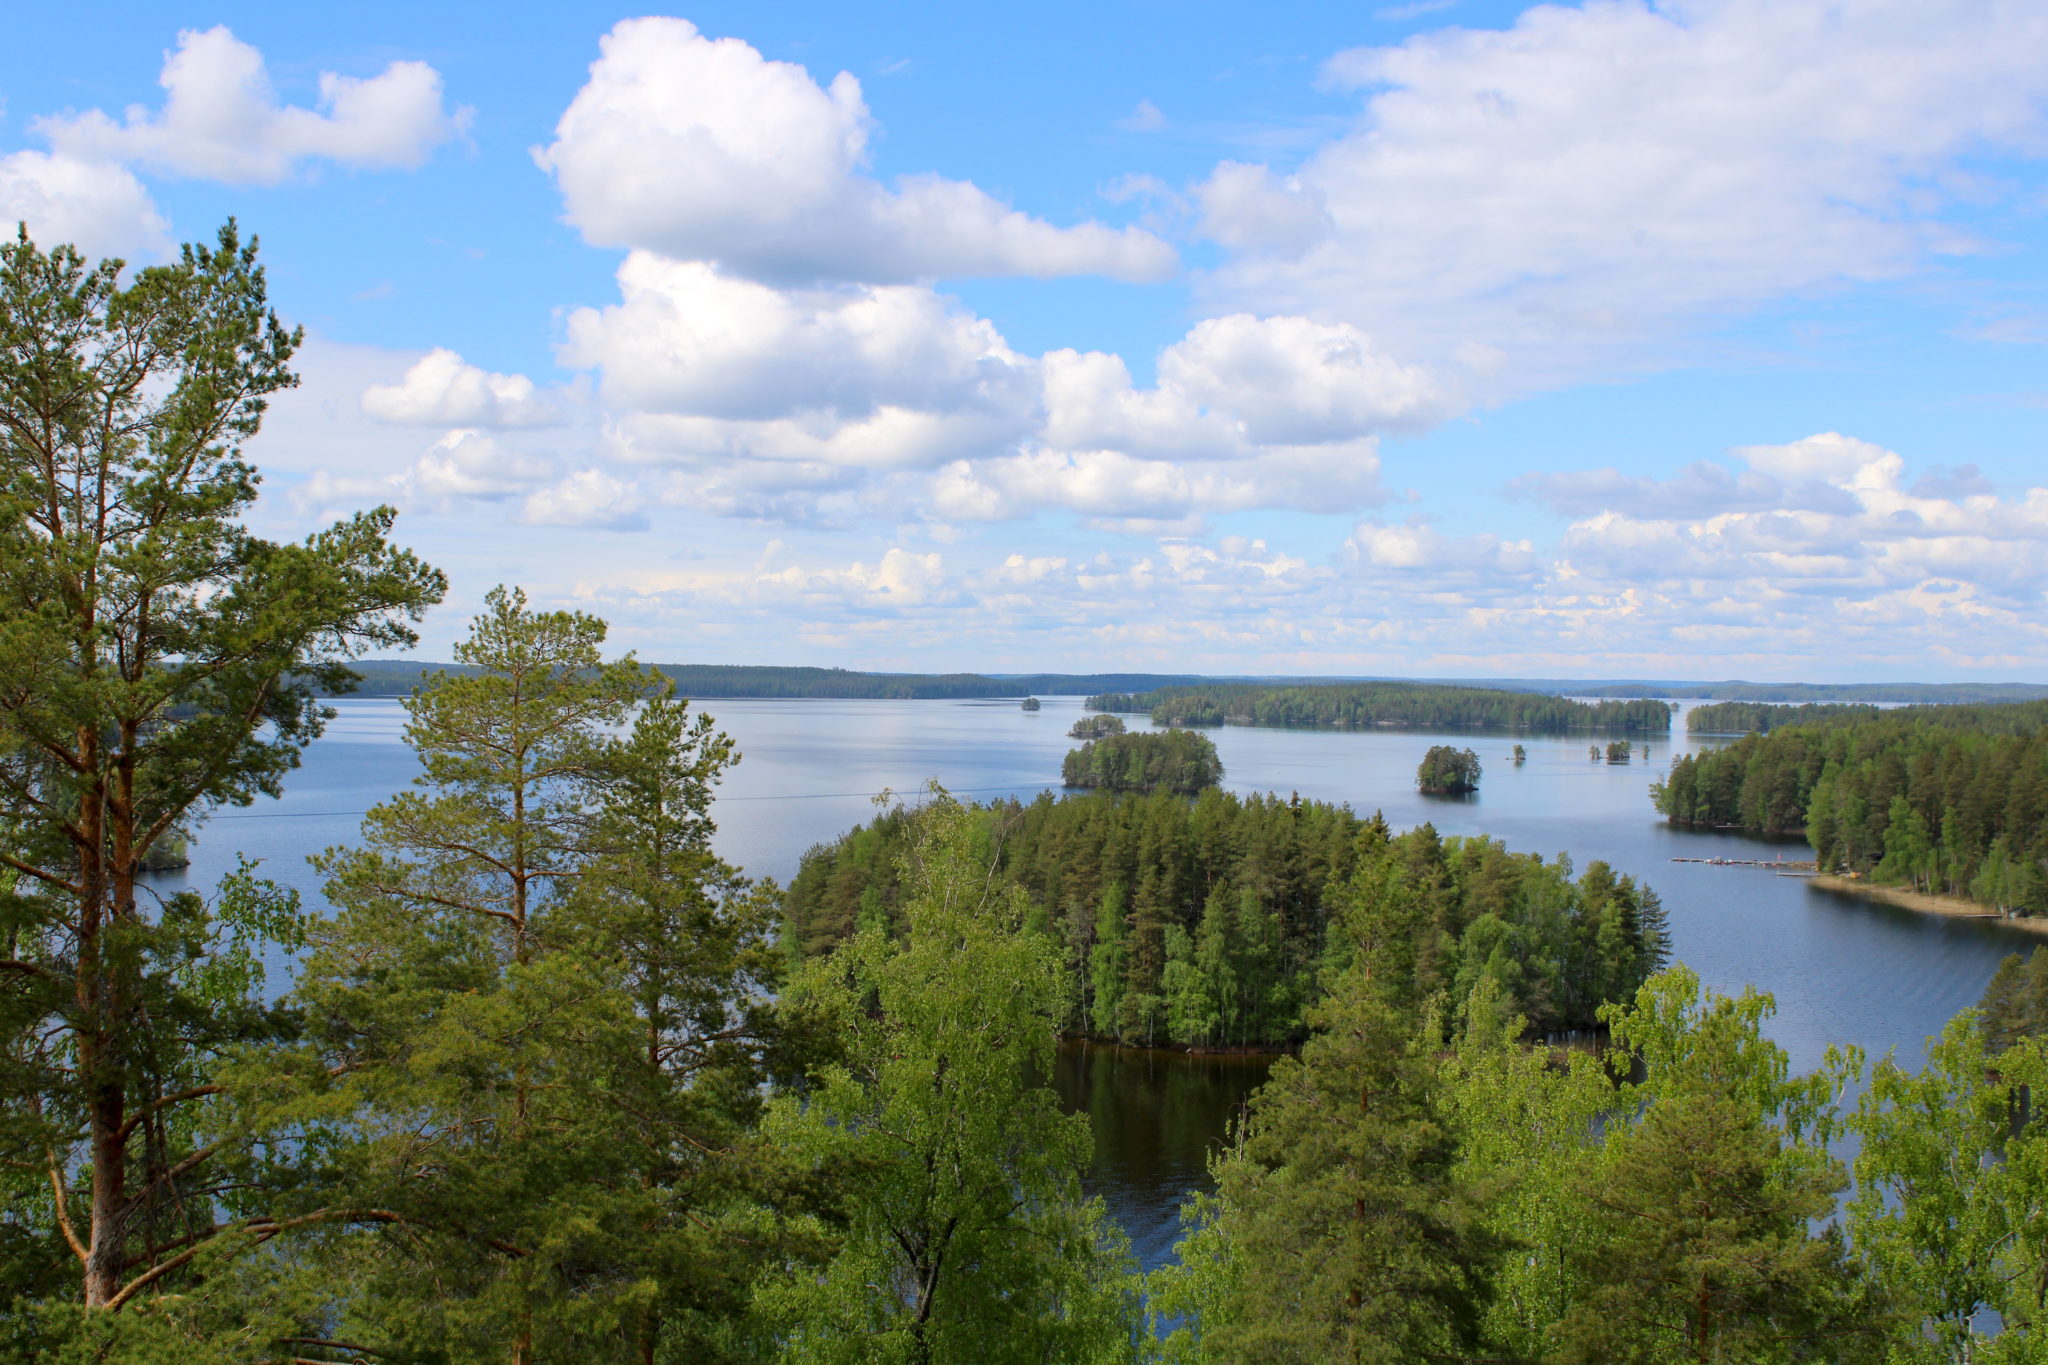 Vacation in Finland, Lake Saimaa region